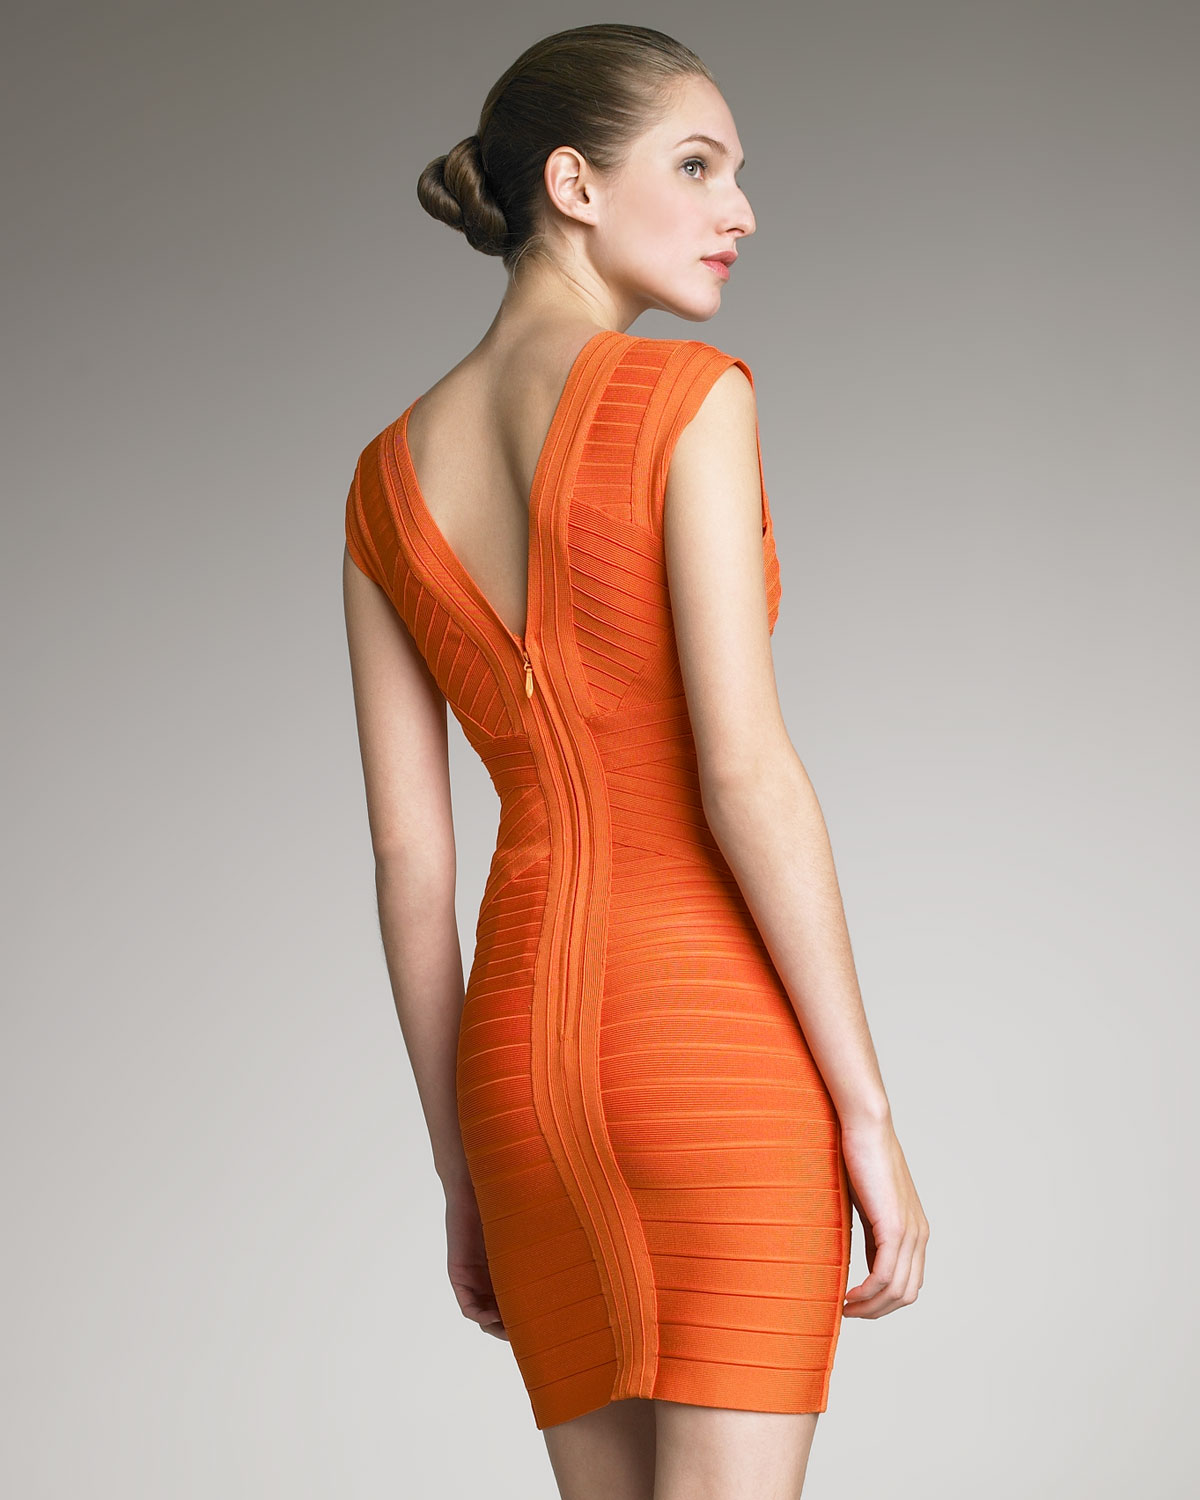 Lyst - Hervé Léger Crisscross Bandage Dress in Orange